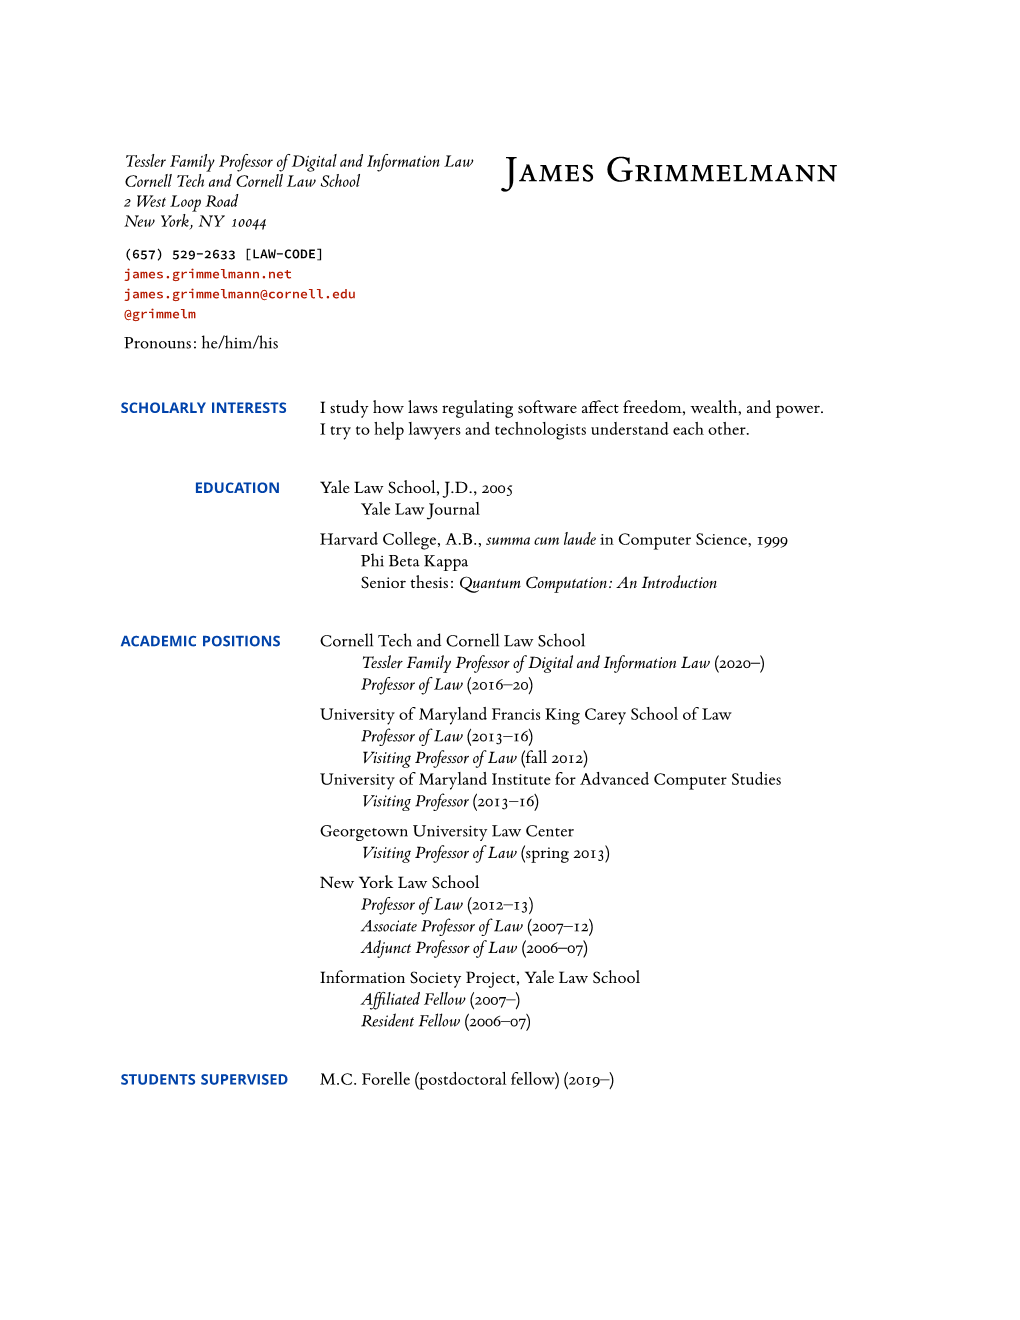 James Grimmelmann CV